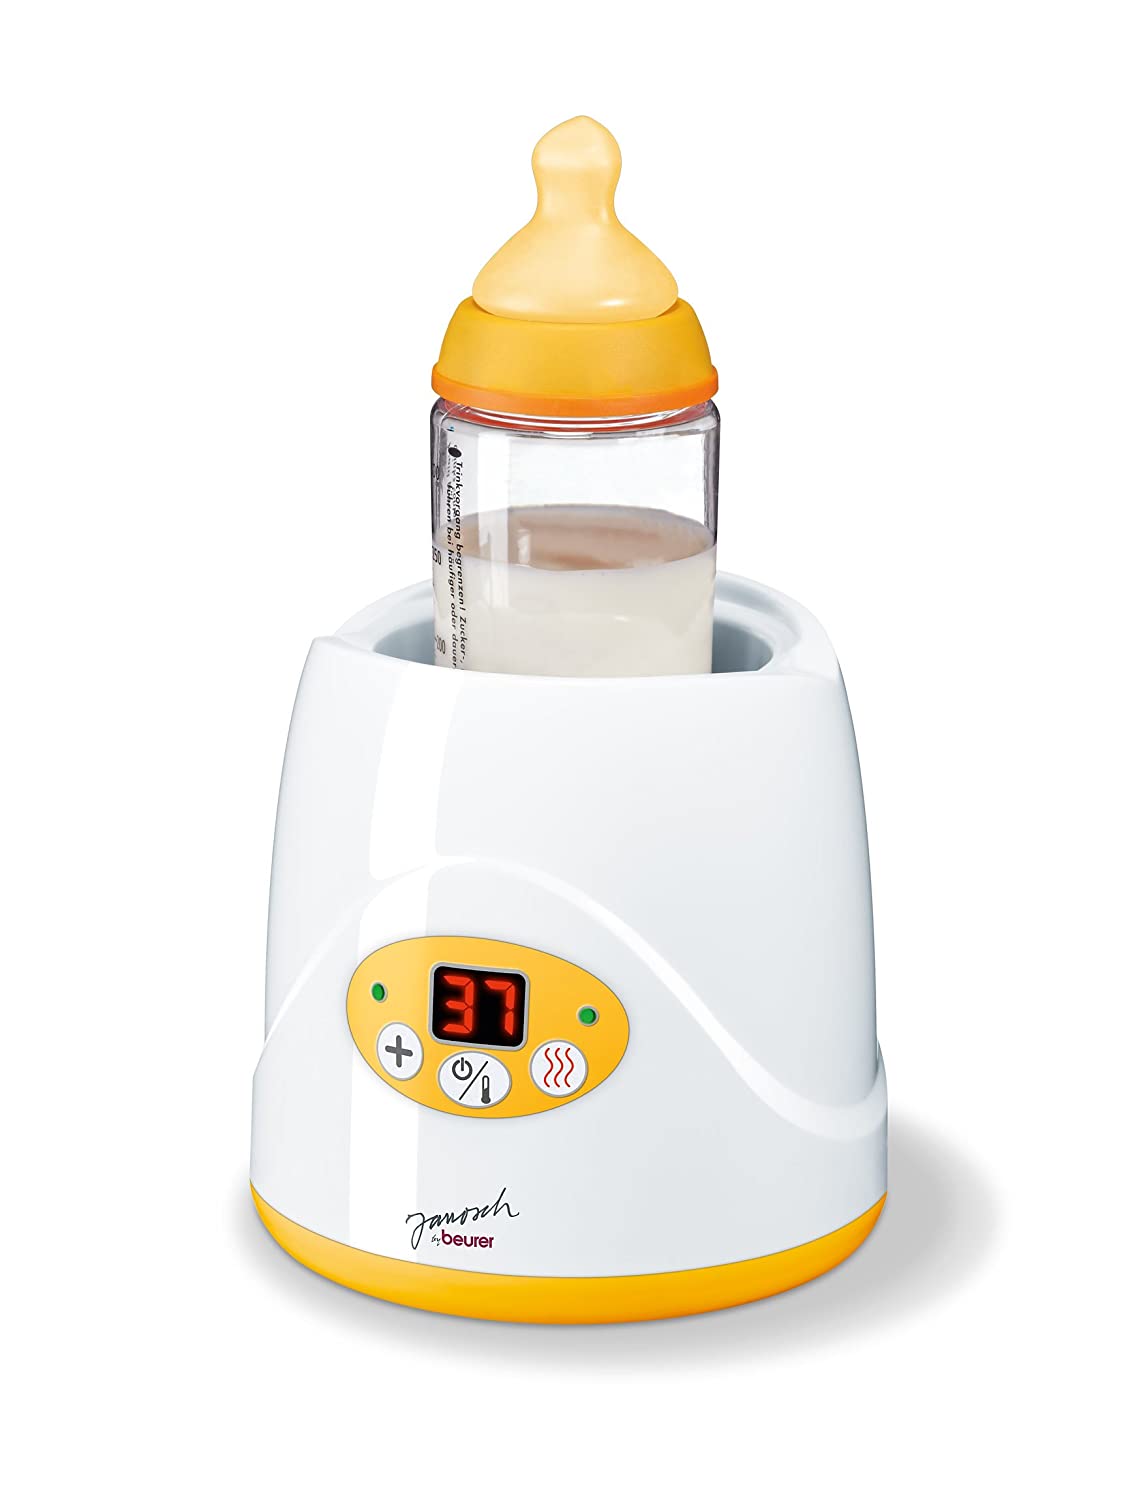 Beurer digital baby food and bottle warmer JBY52